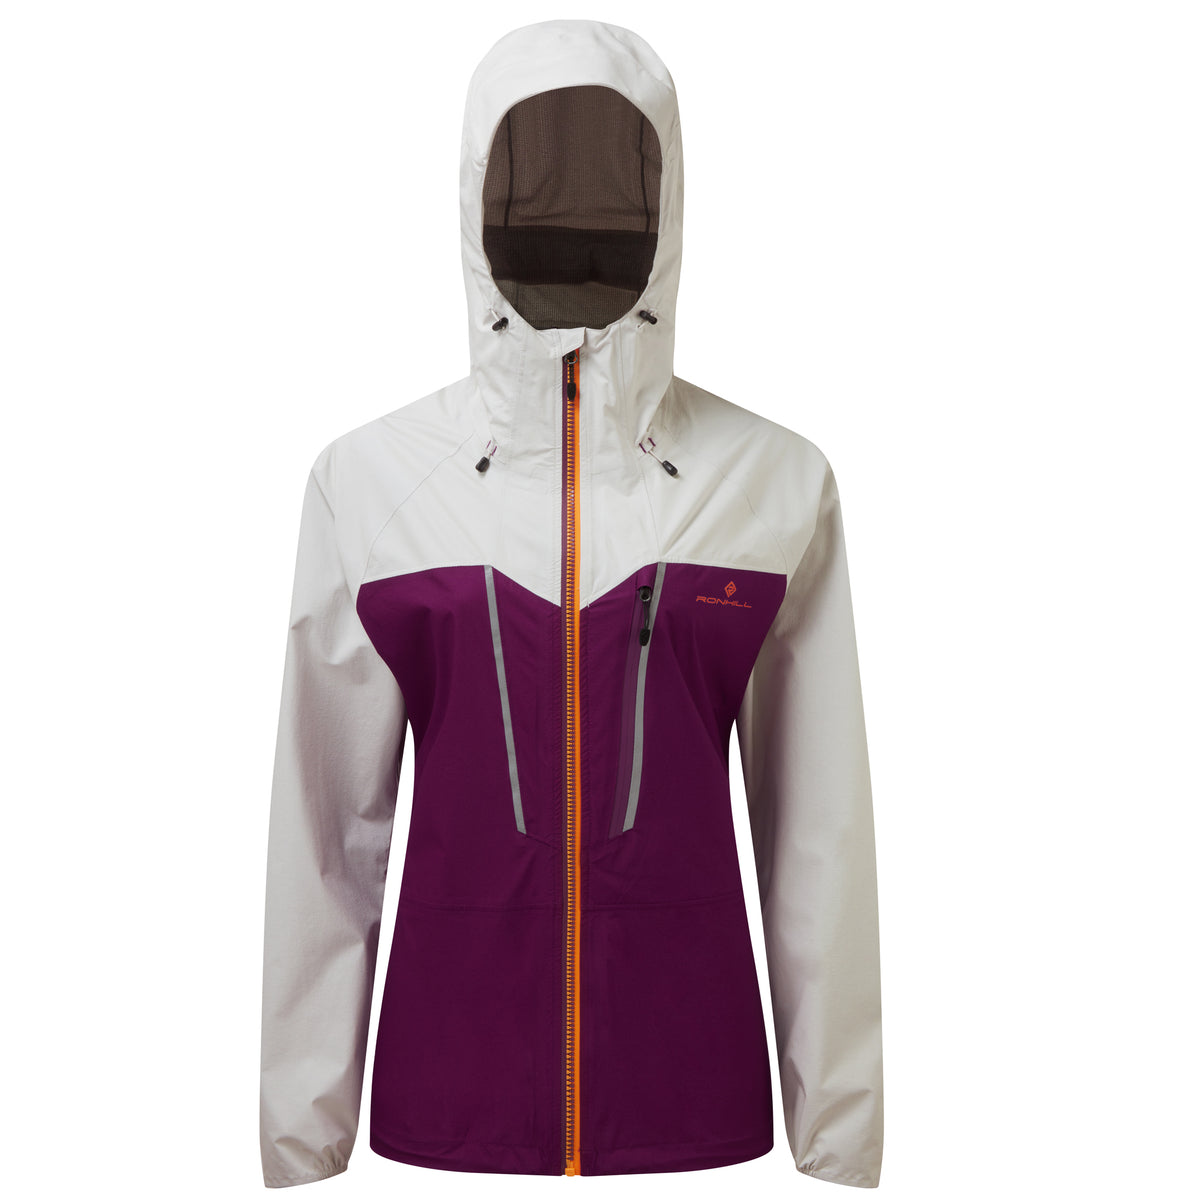 Ronhill Core Women's Afterhours Running Jacket, Thistle/Cobalt/Reflect, 8